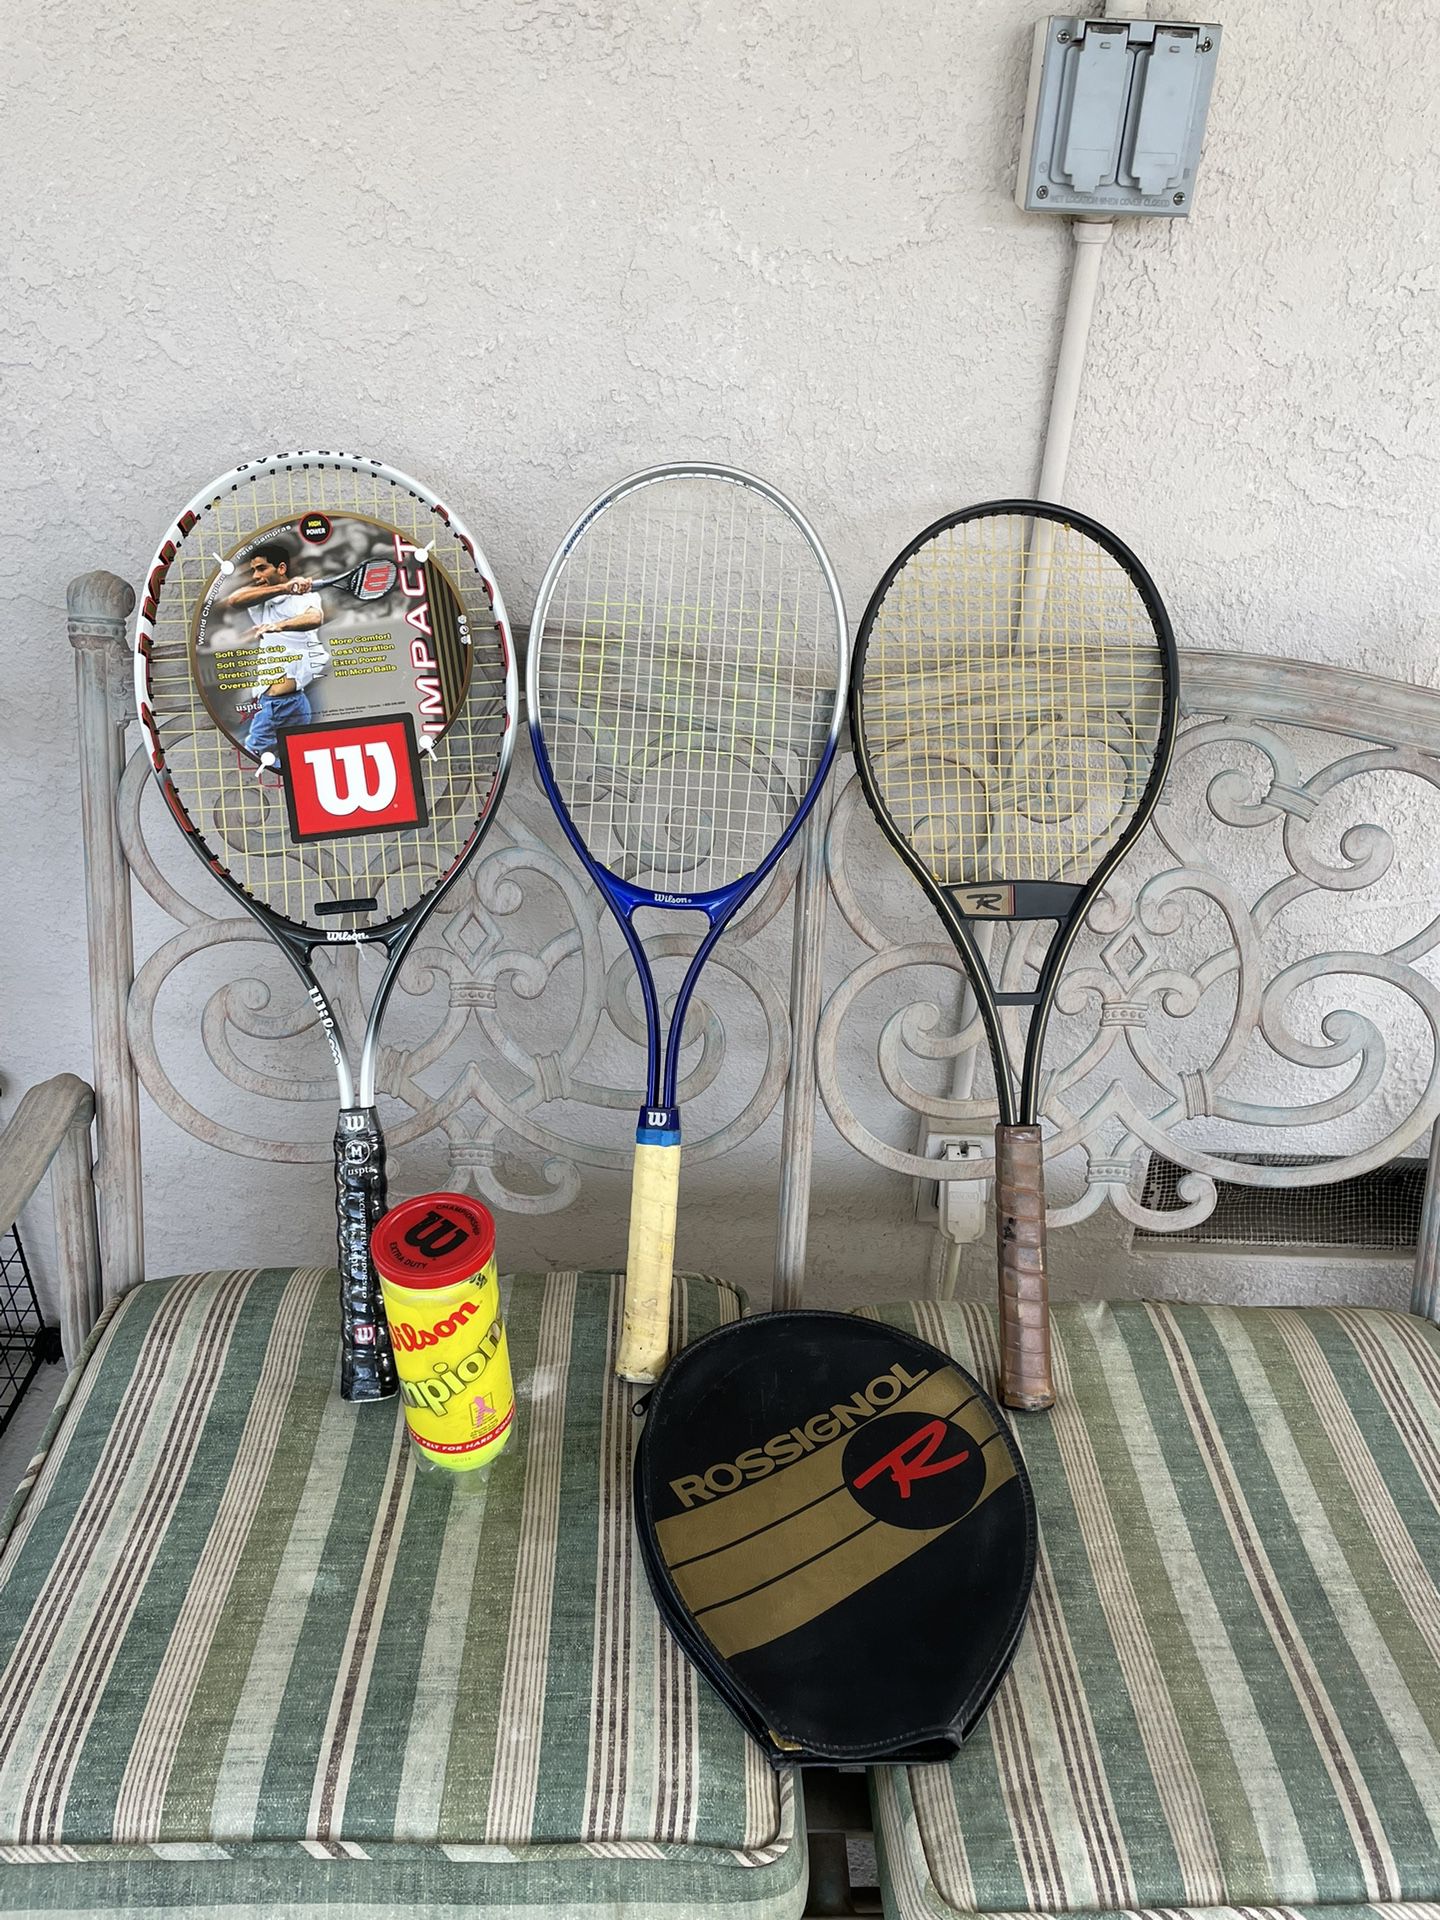 3 Tennis 🎾 Rackets And A 3 Tennis 🎾 